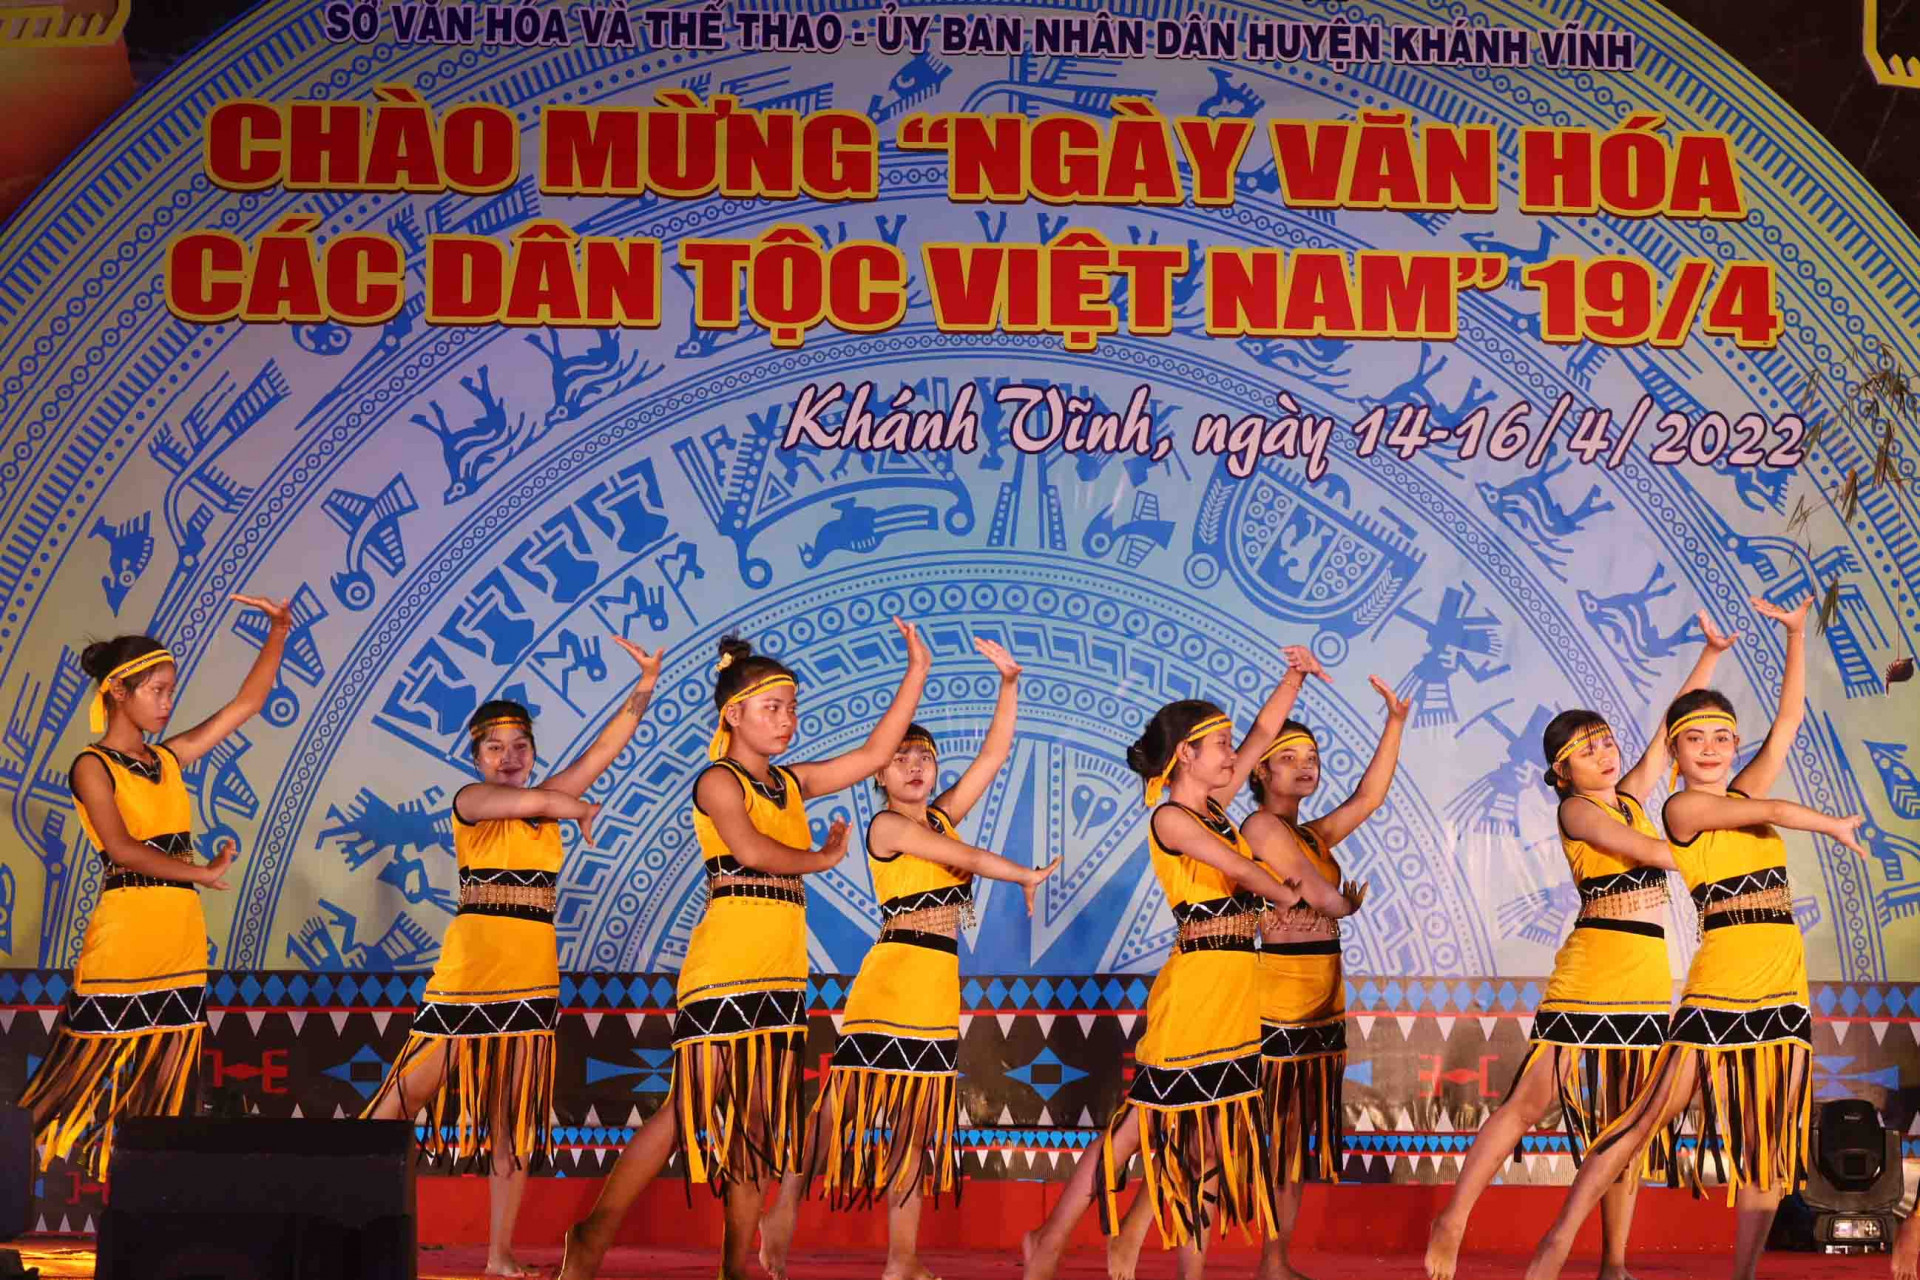 Performance of Raglai dance of Cam Lam District